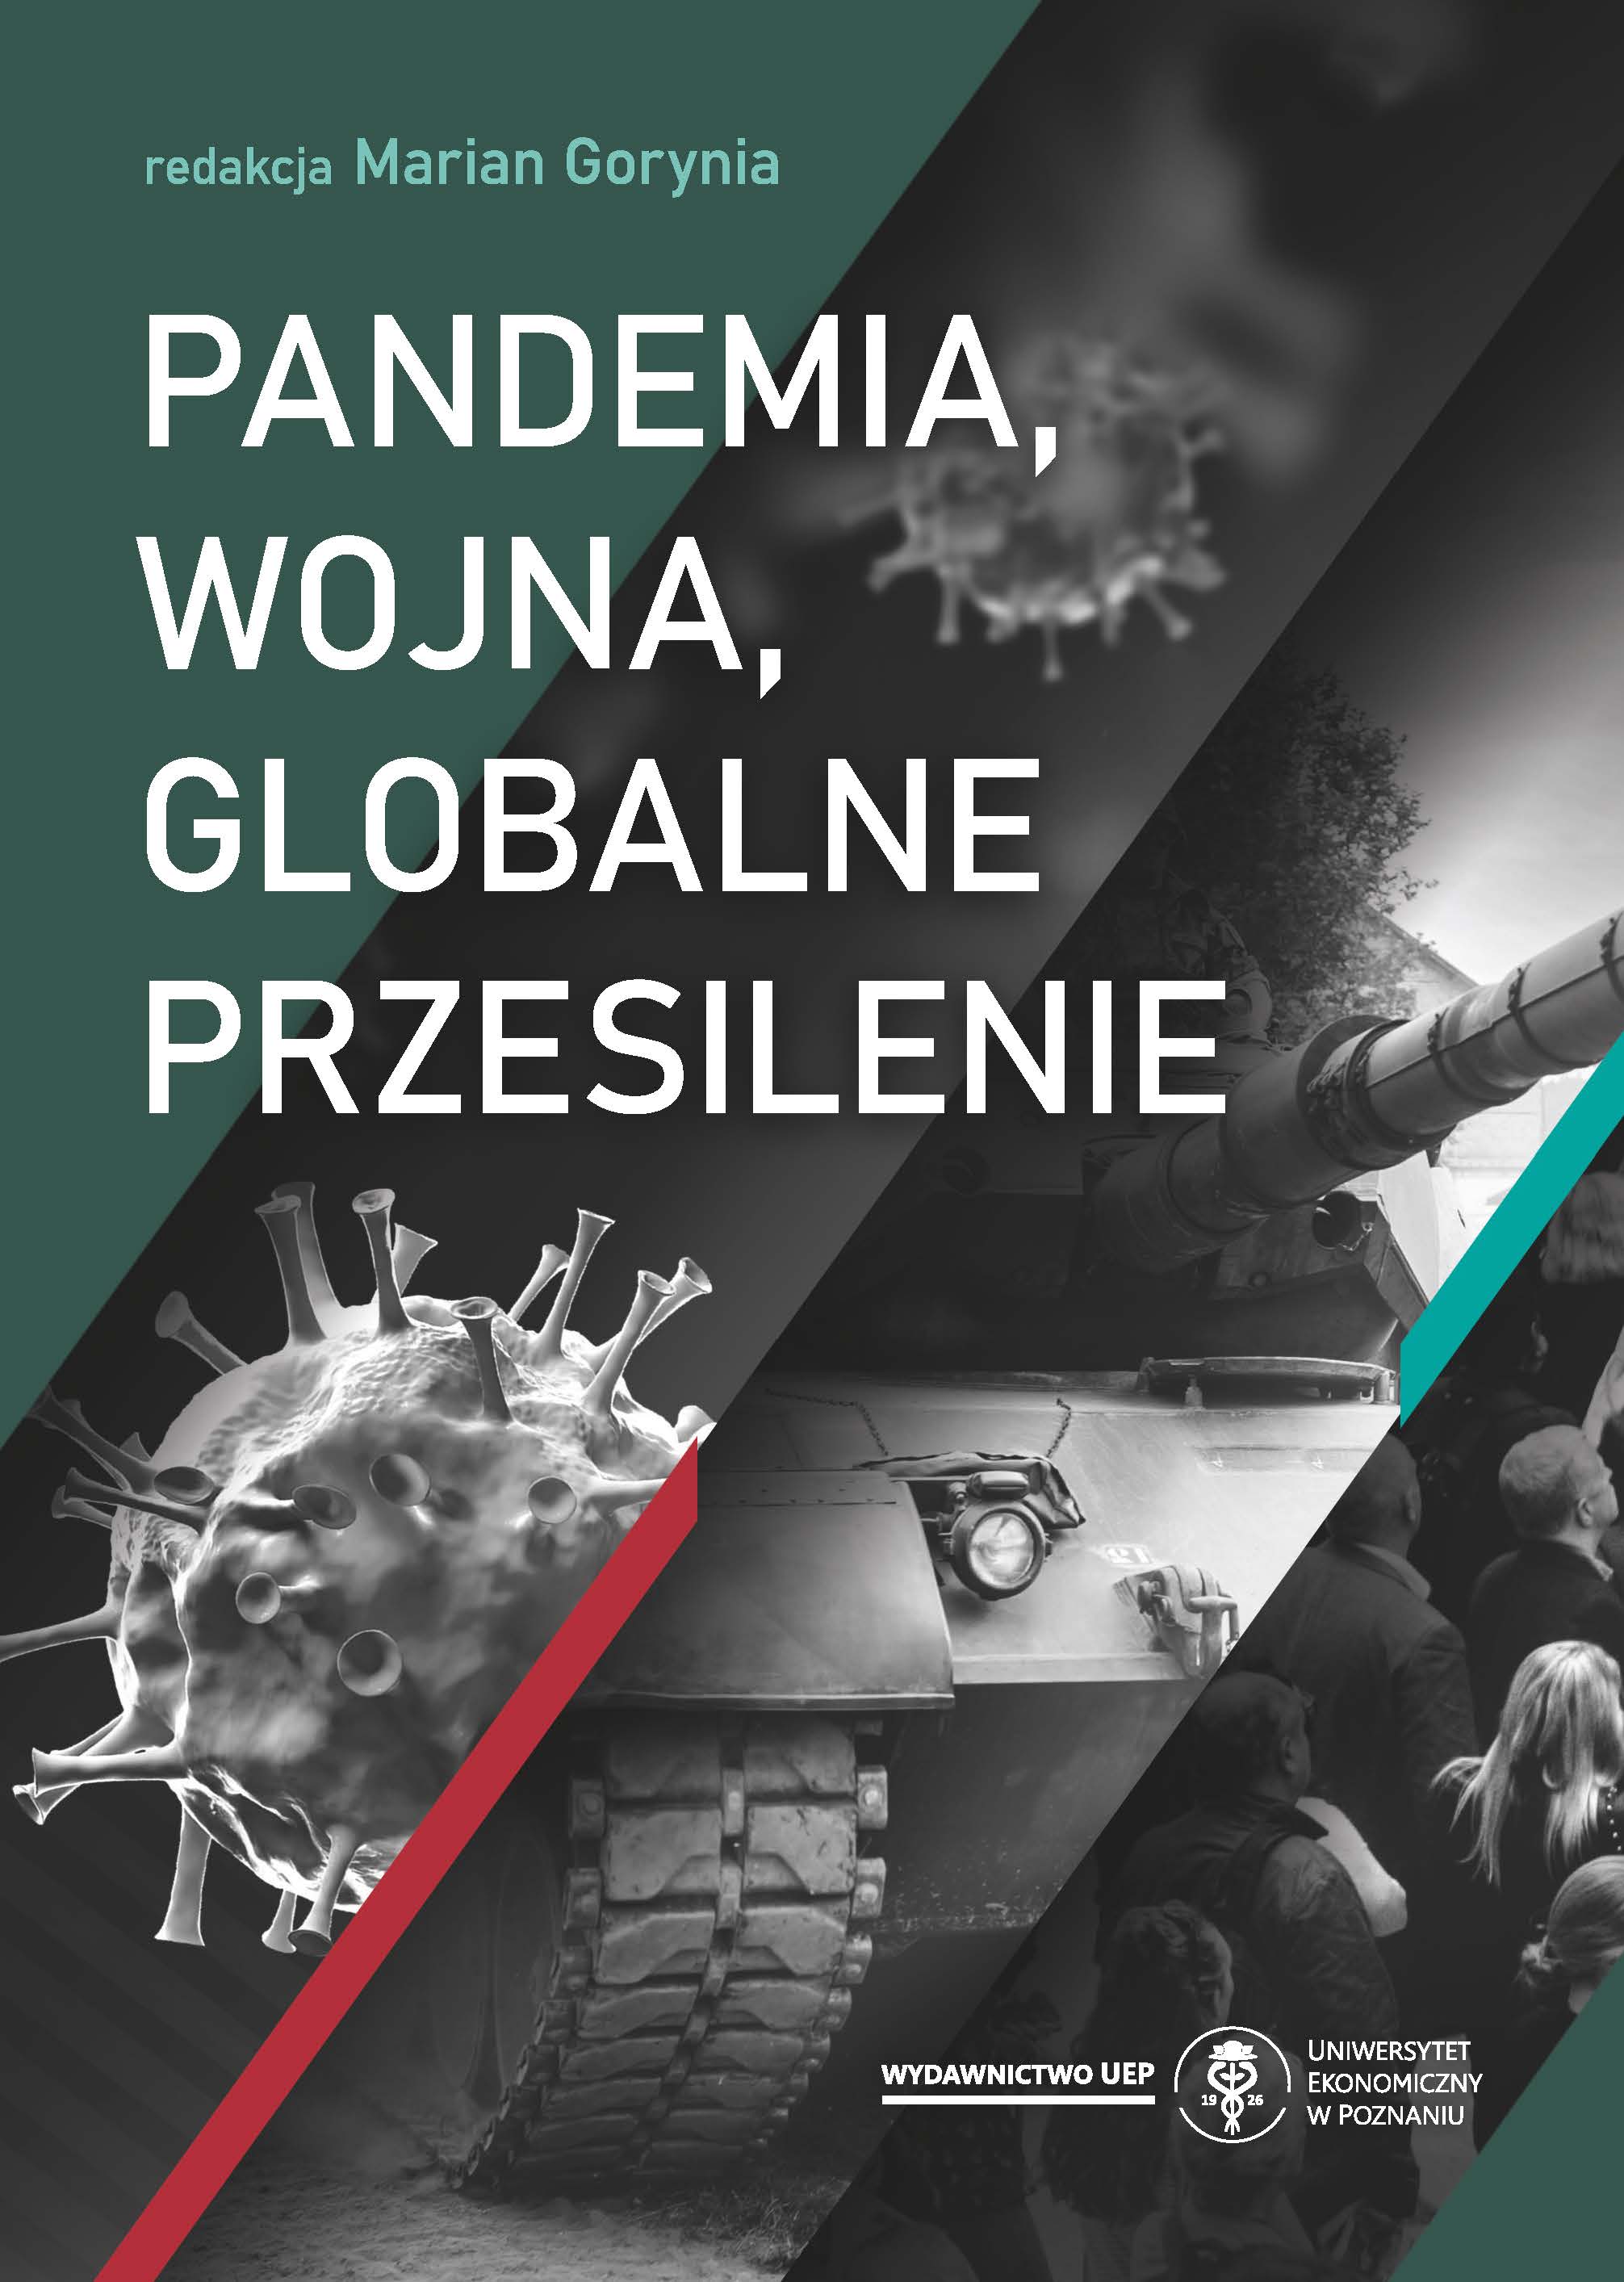 Pandemic, war, global crisis